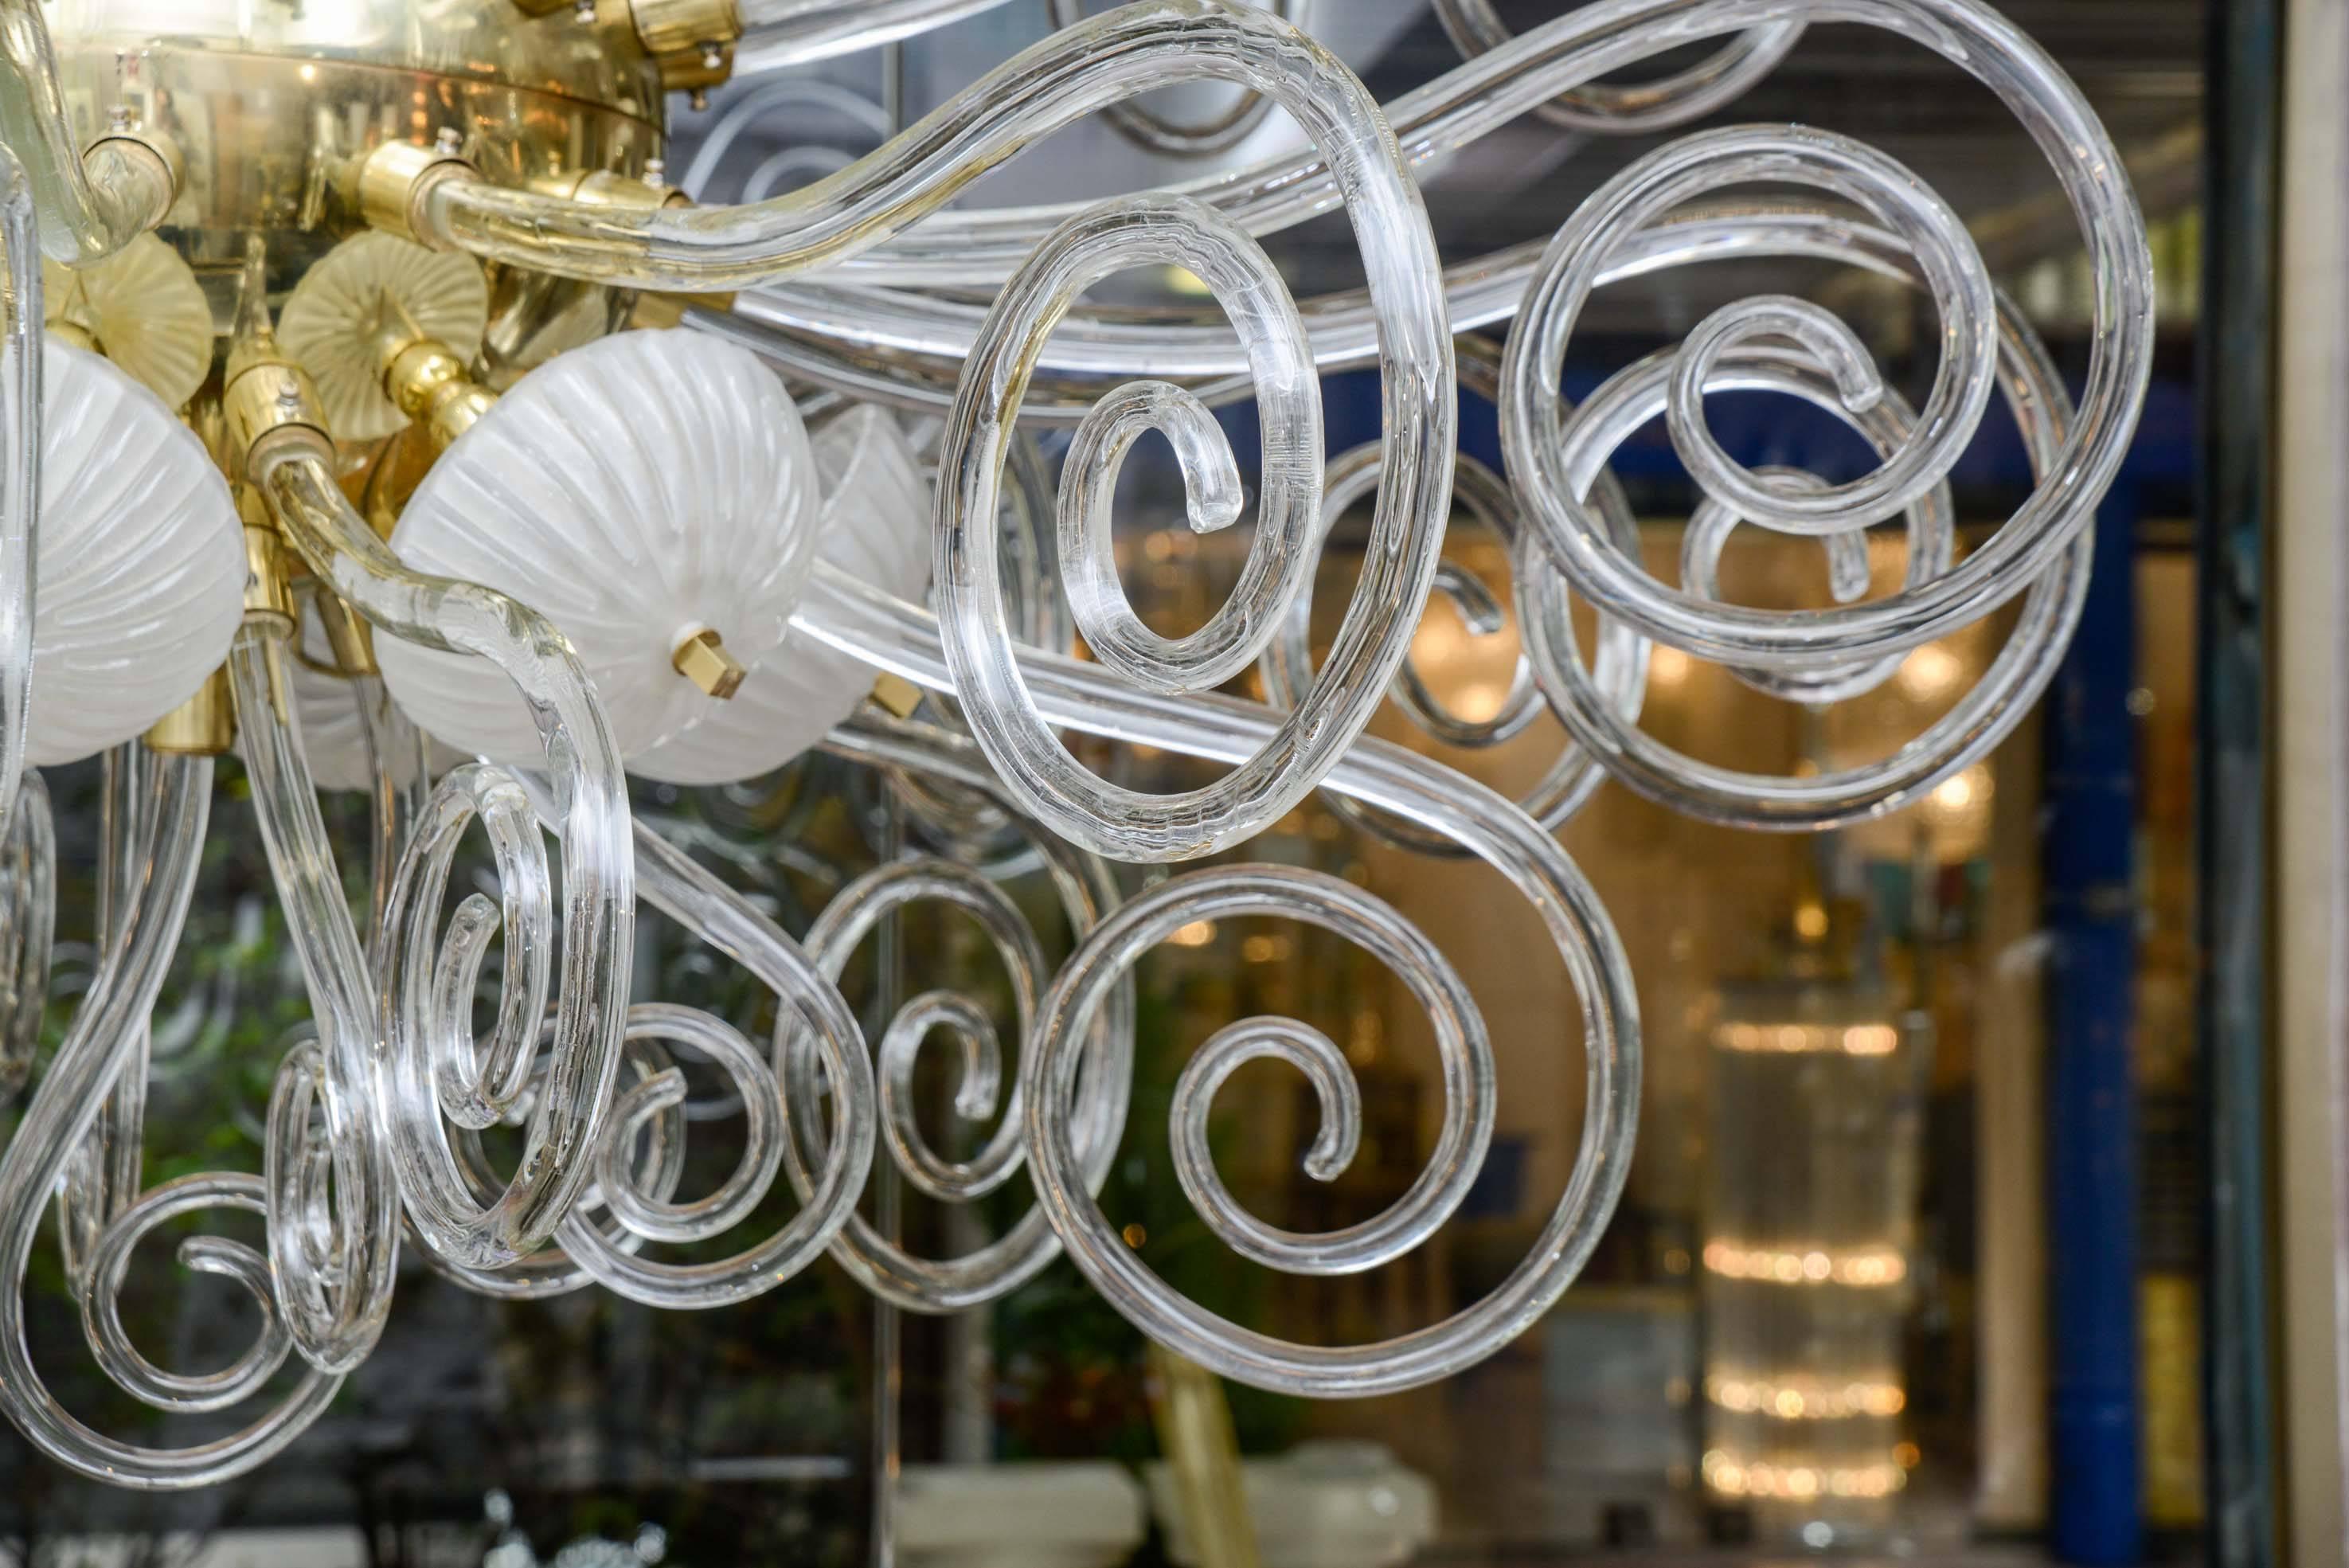 Chandelier in Murano glass.